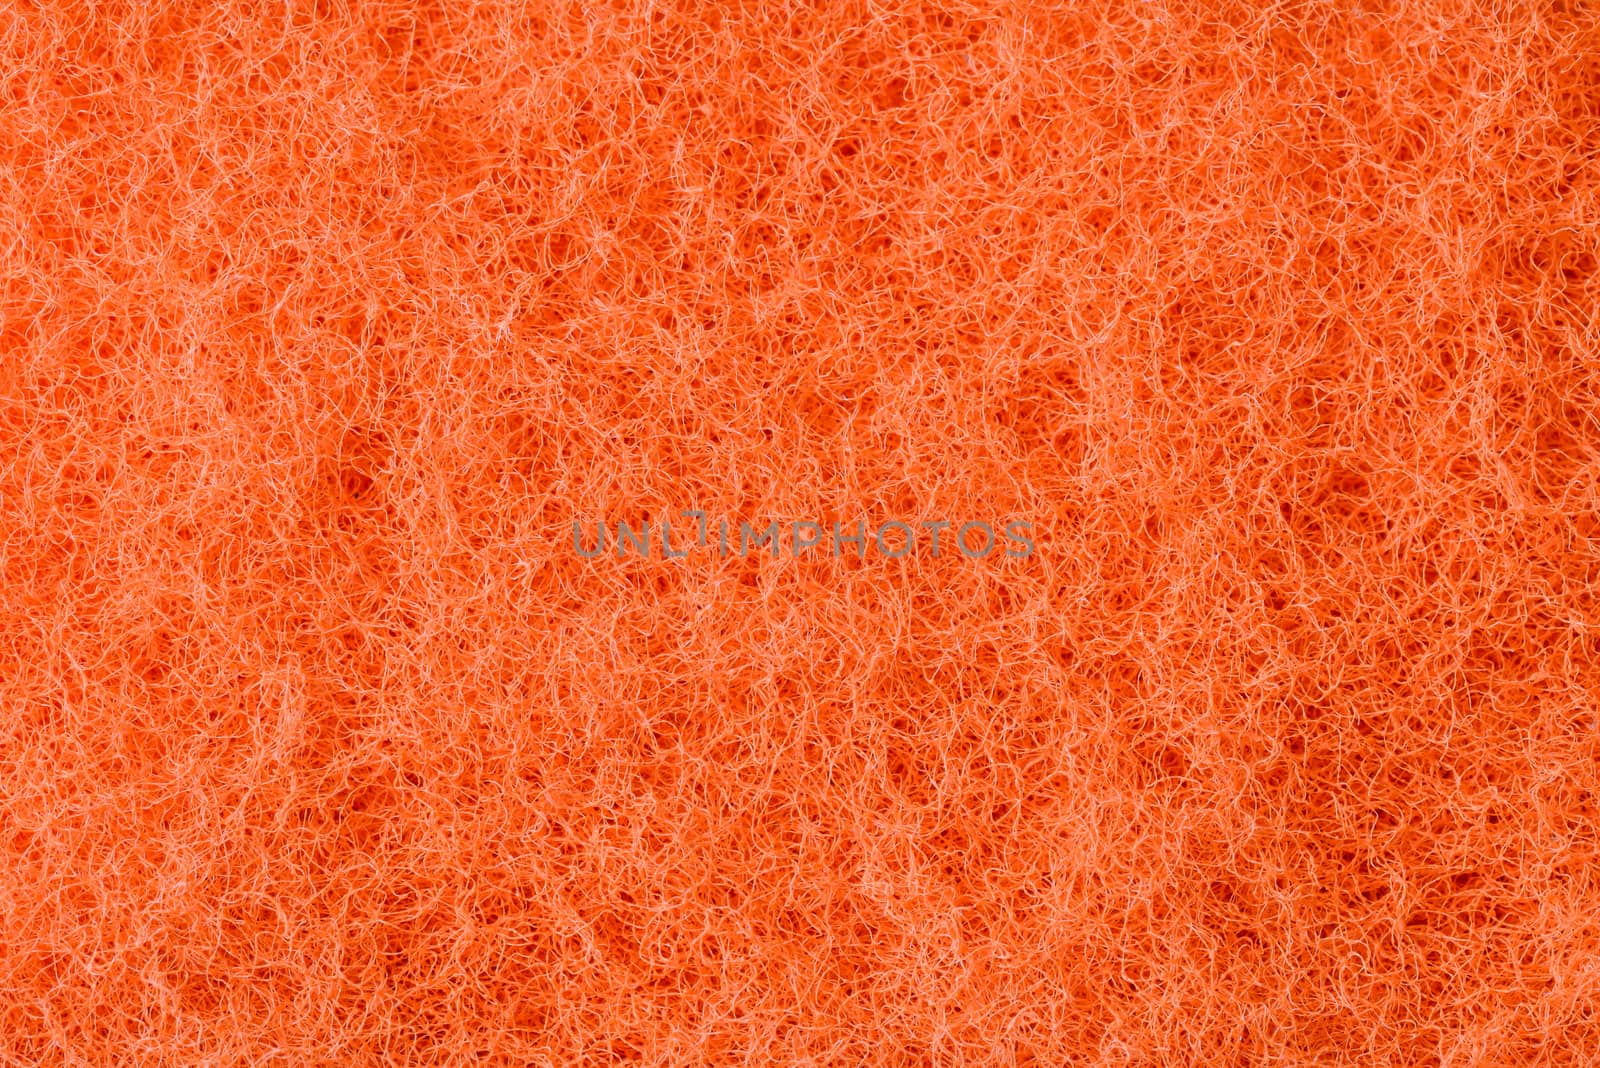 Synthetic Sponge Texture by MaxalTamor